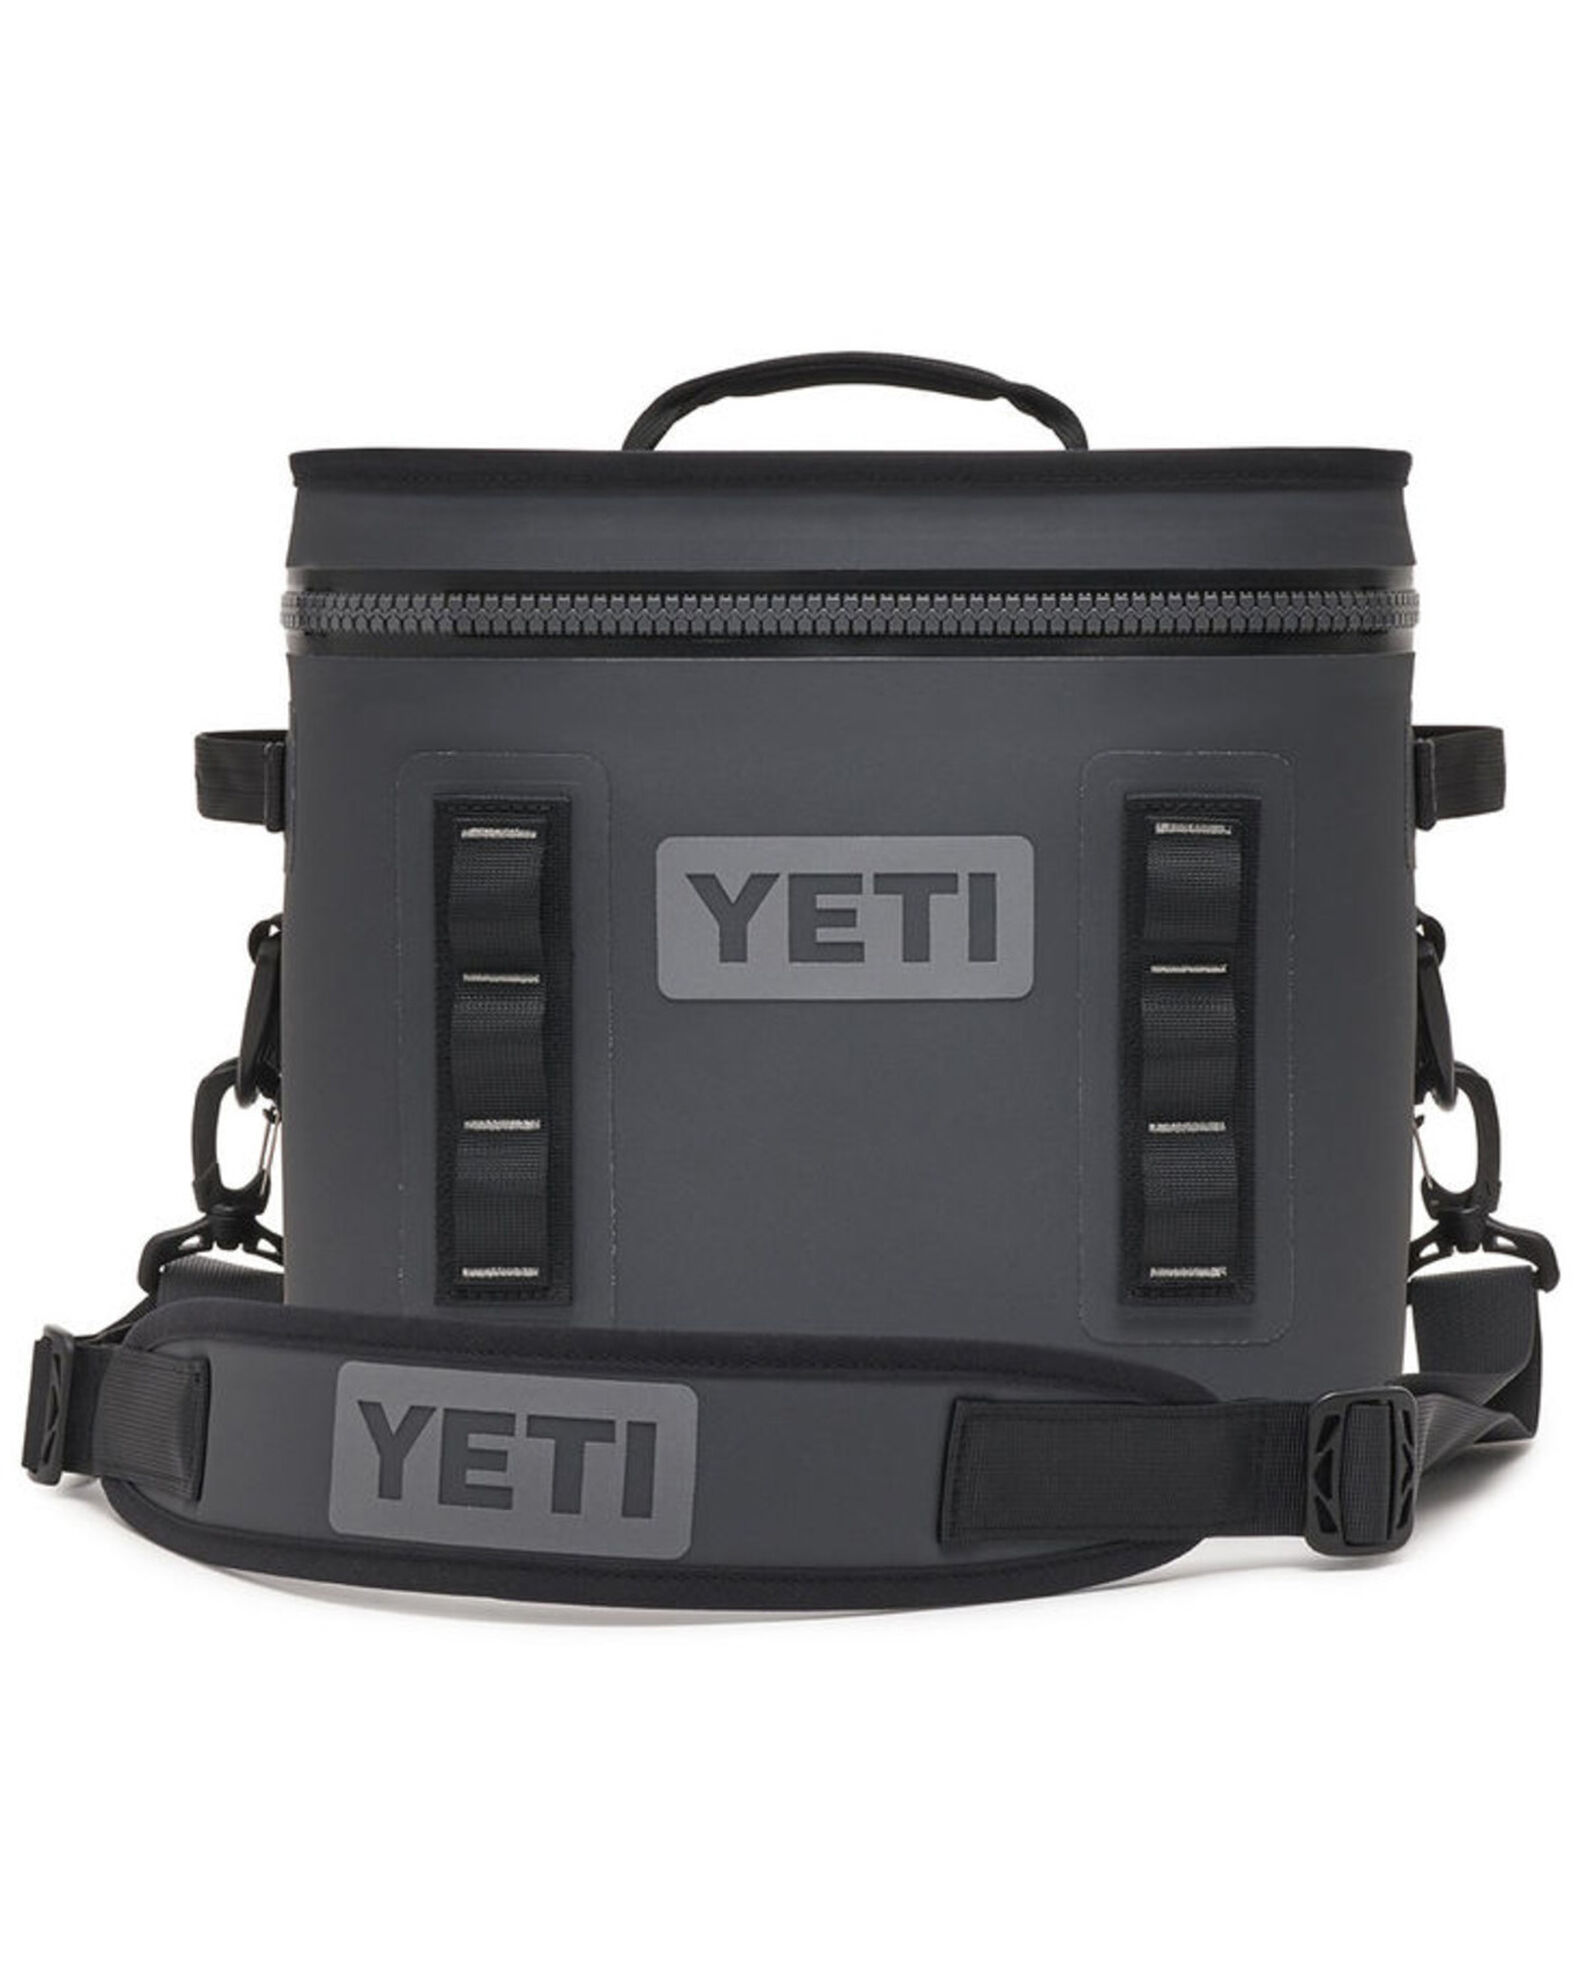 New YETI Hopper Flip 12 Portable Soft Cooler Charcoal Model GS3130-1